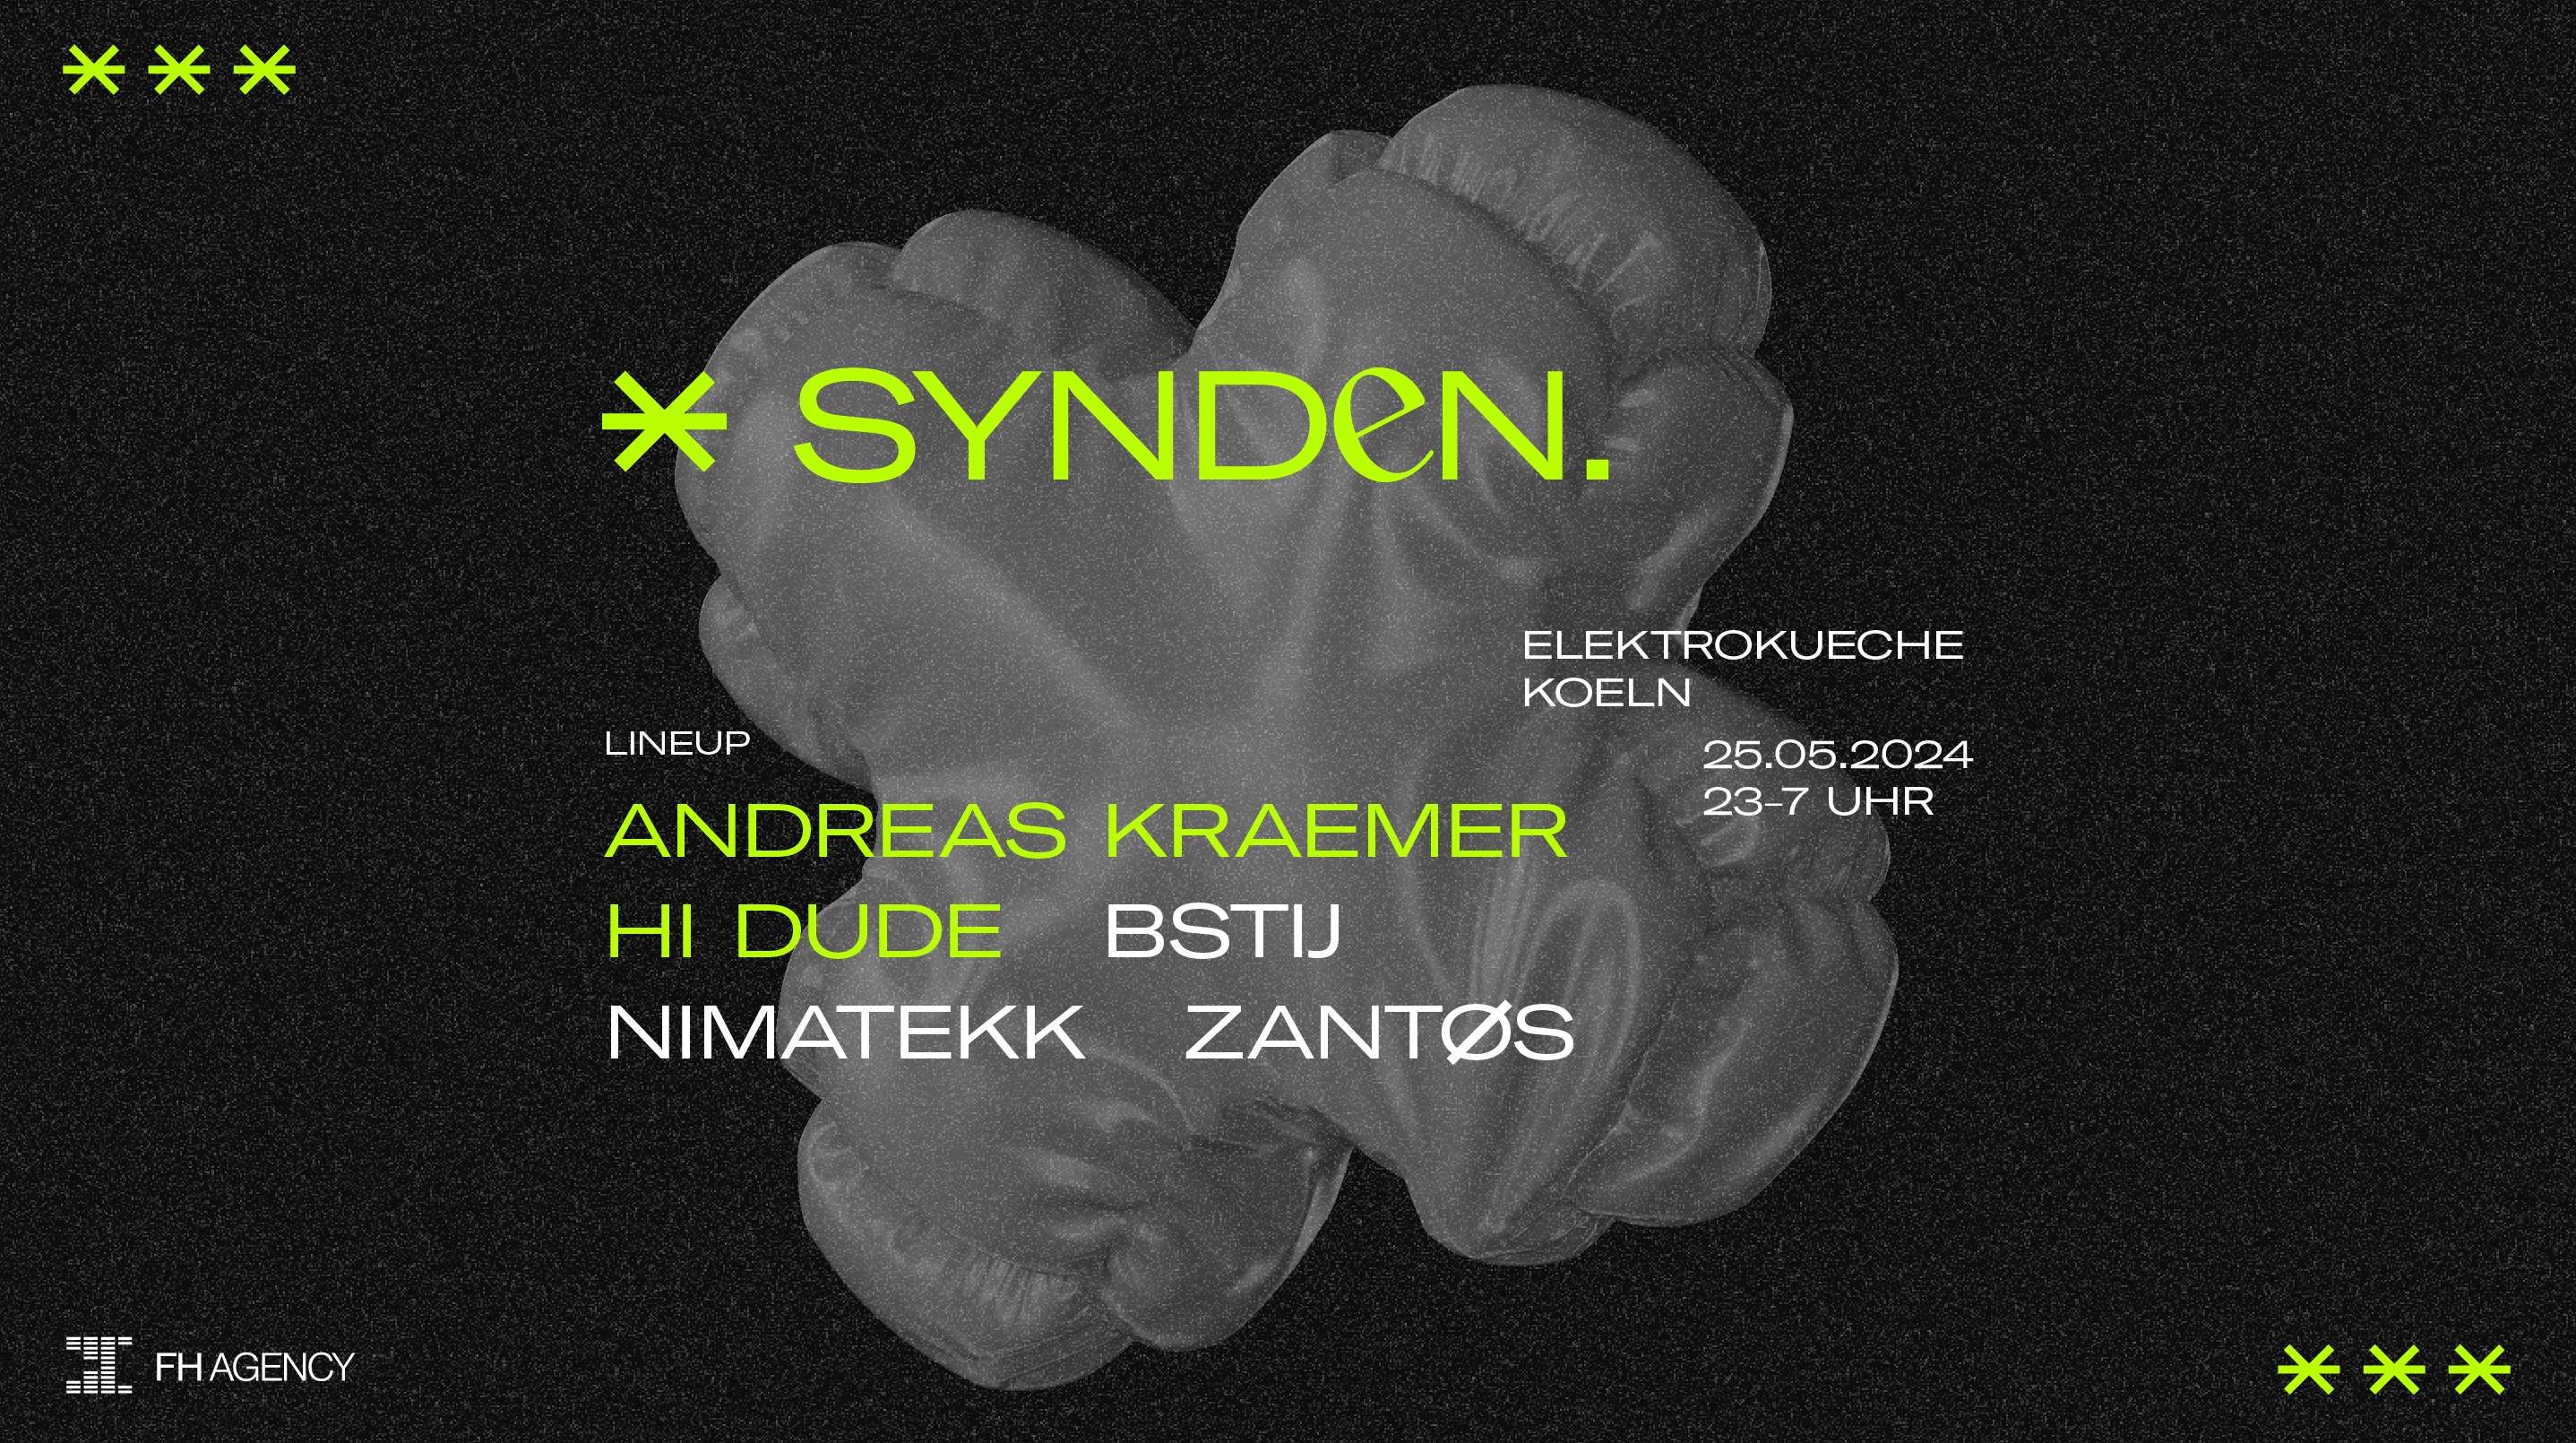 SYNDEN. with H! Dude & Andreas Kraemer - Página frontal